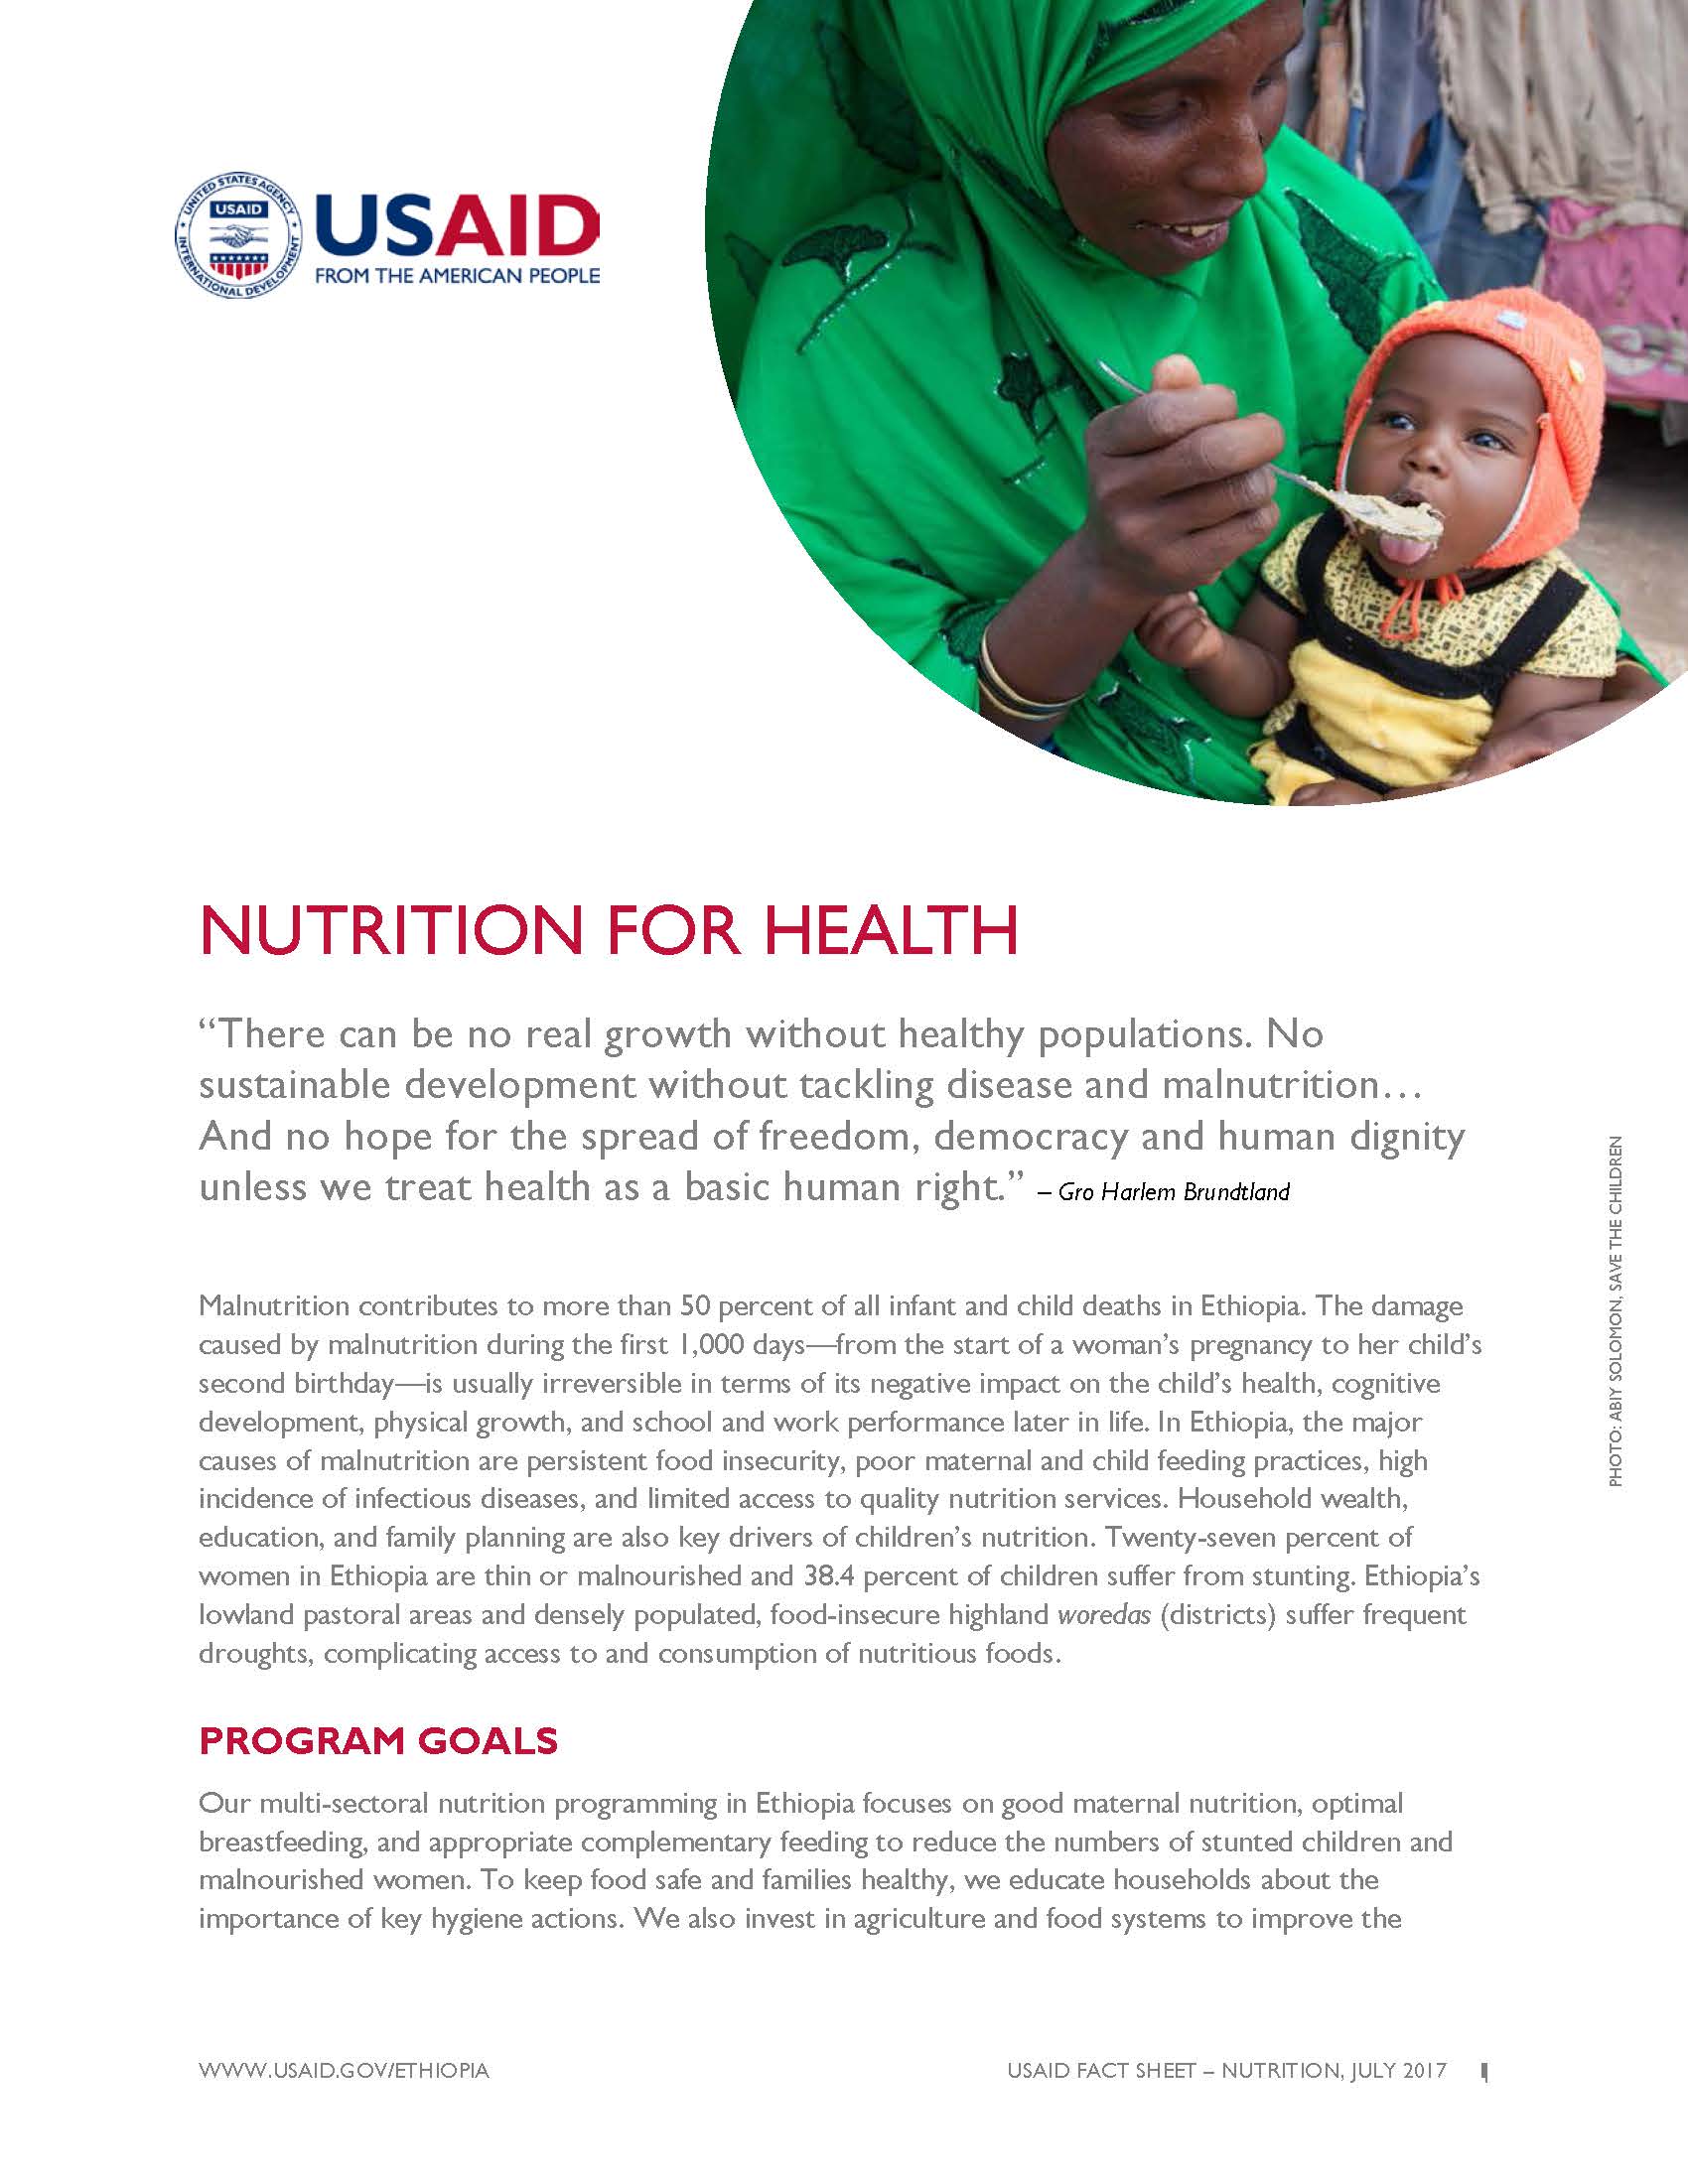 Ethiopia Fact Sheet Nutrition for Health Jul 2017